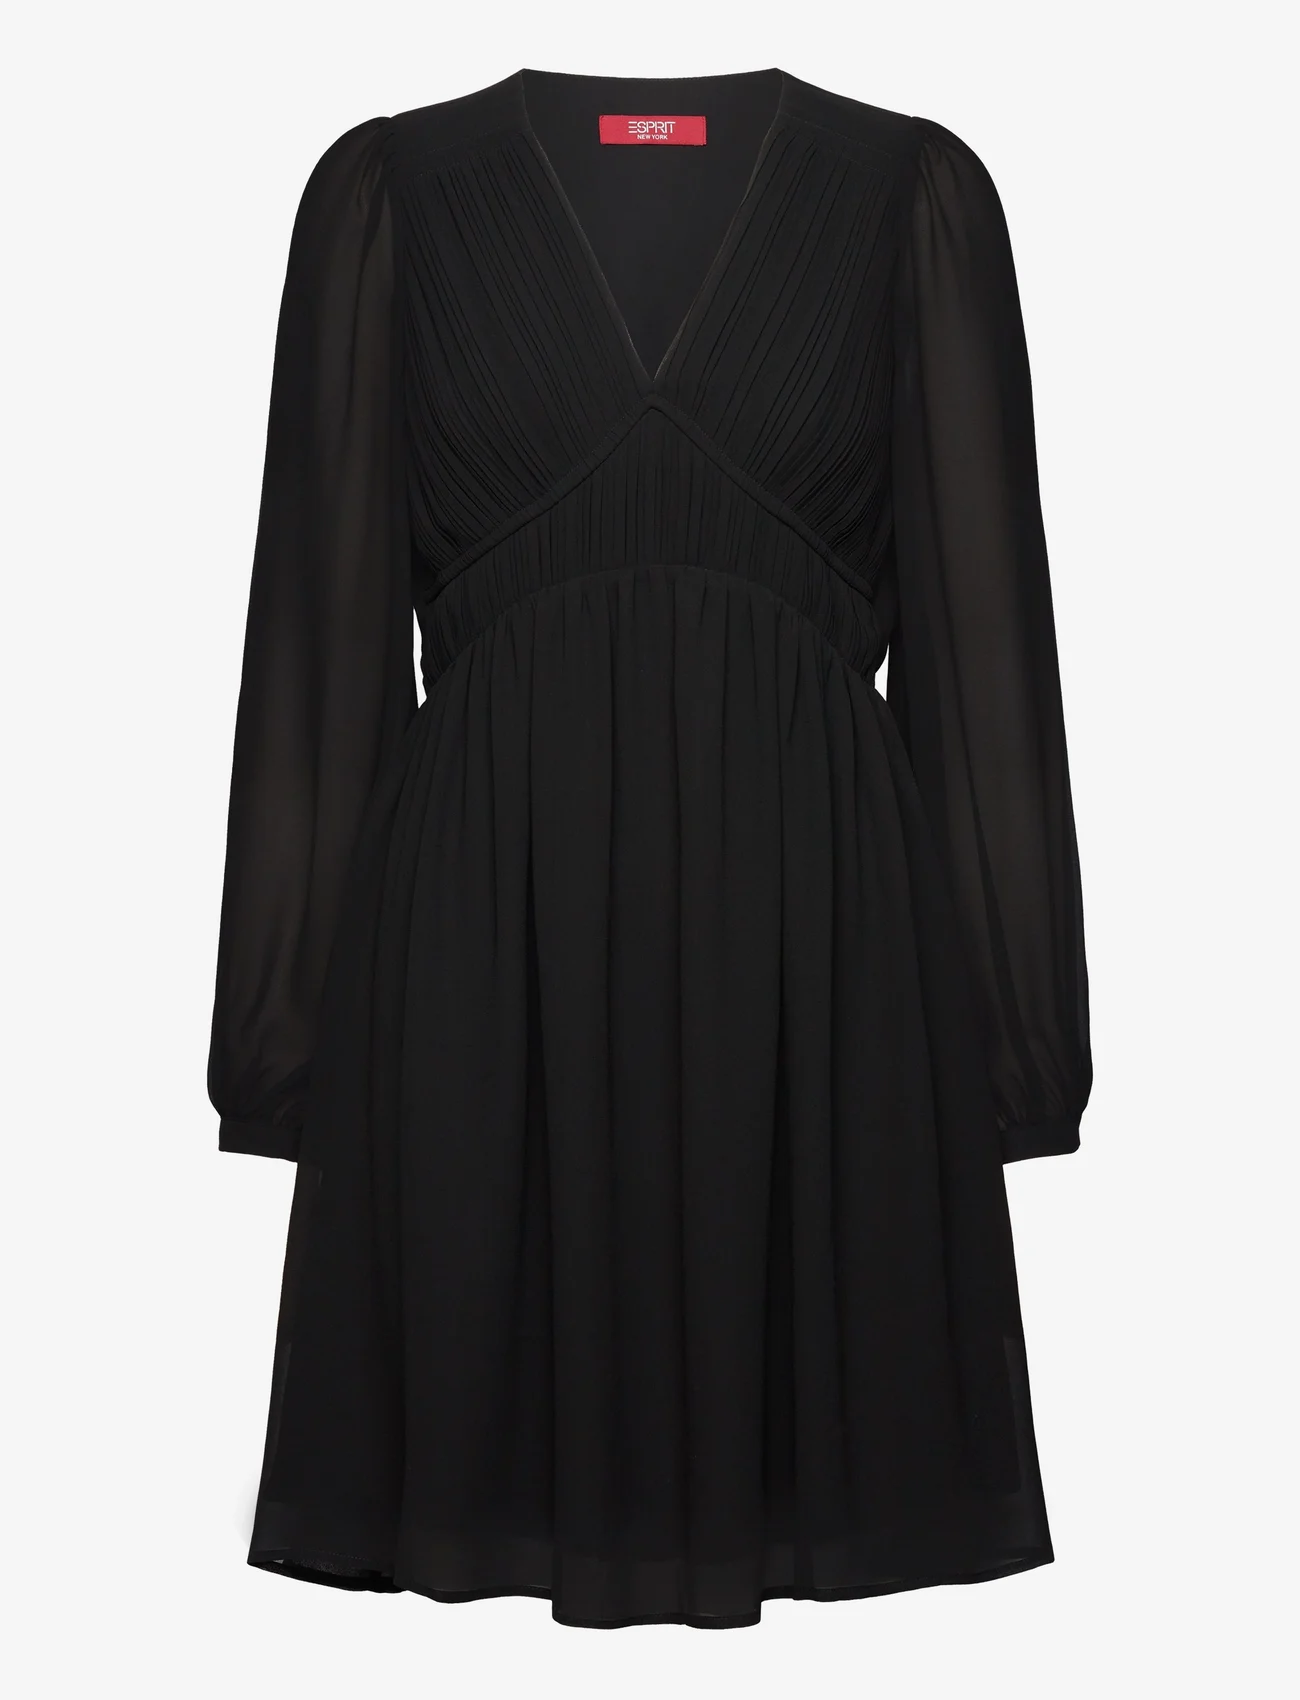 Esprit Casual - Dresses light woven - festmode zu outlet-preisen - black - 0